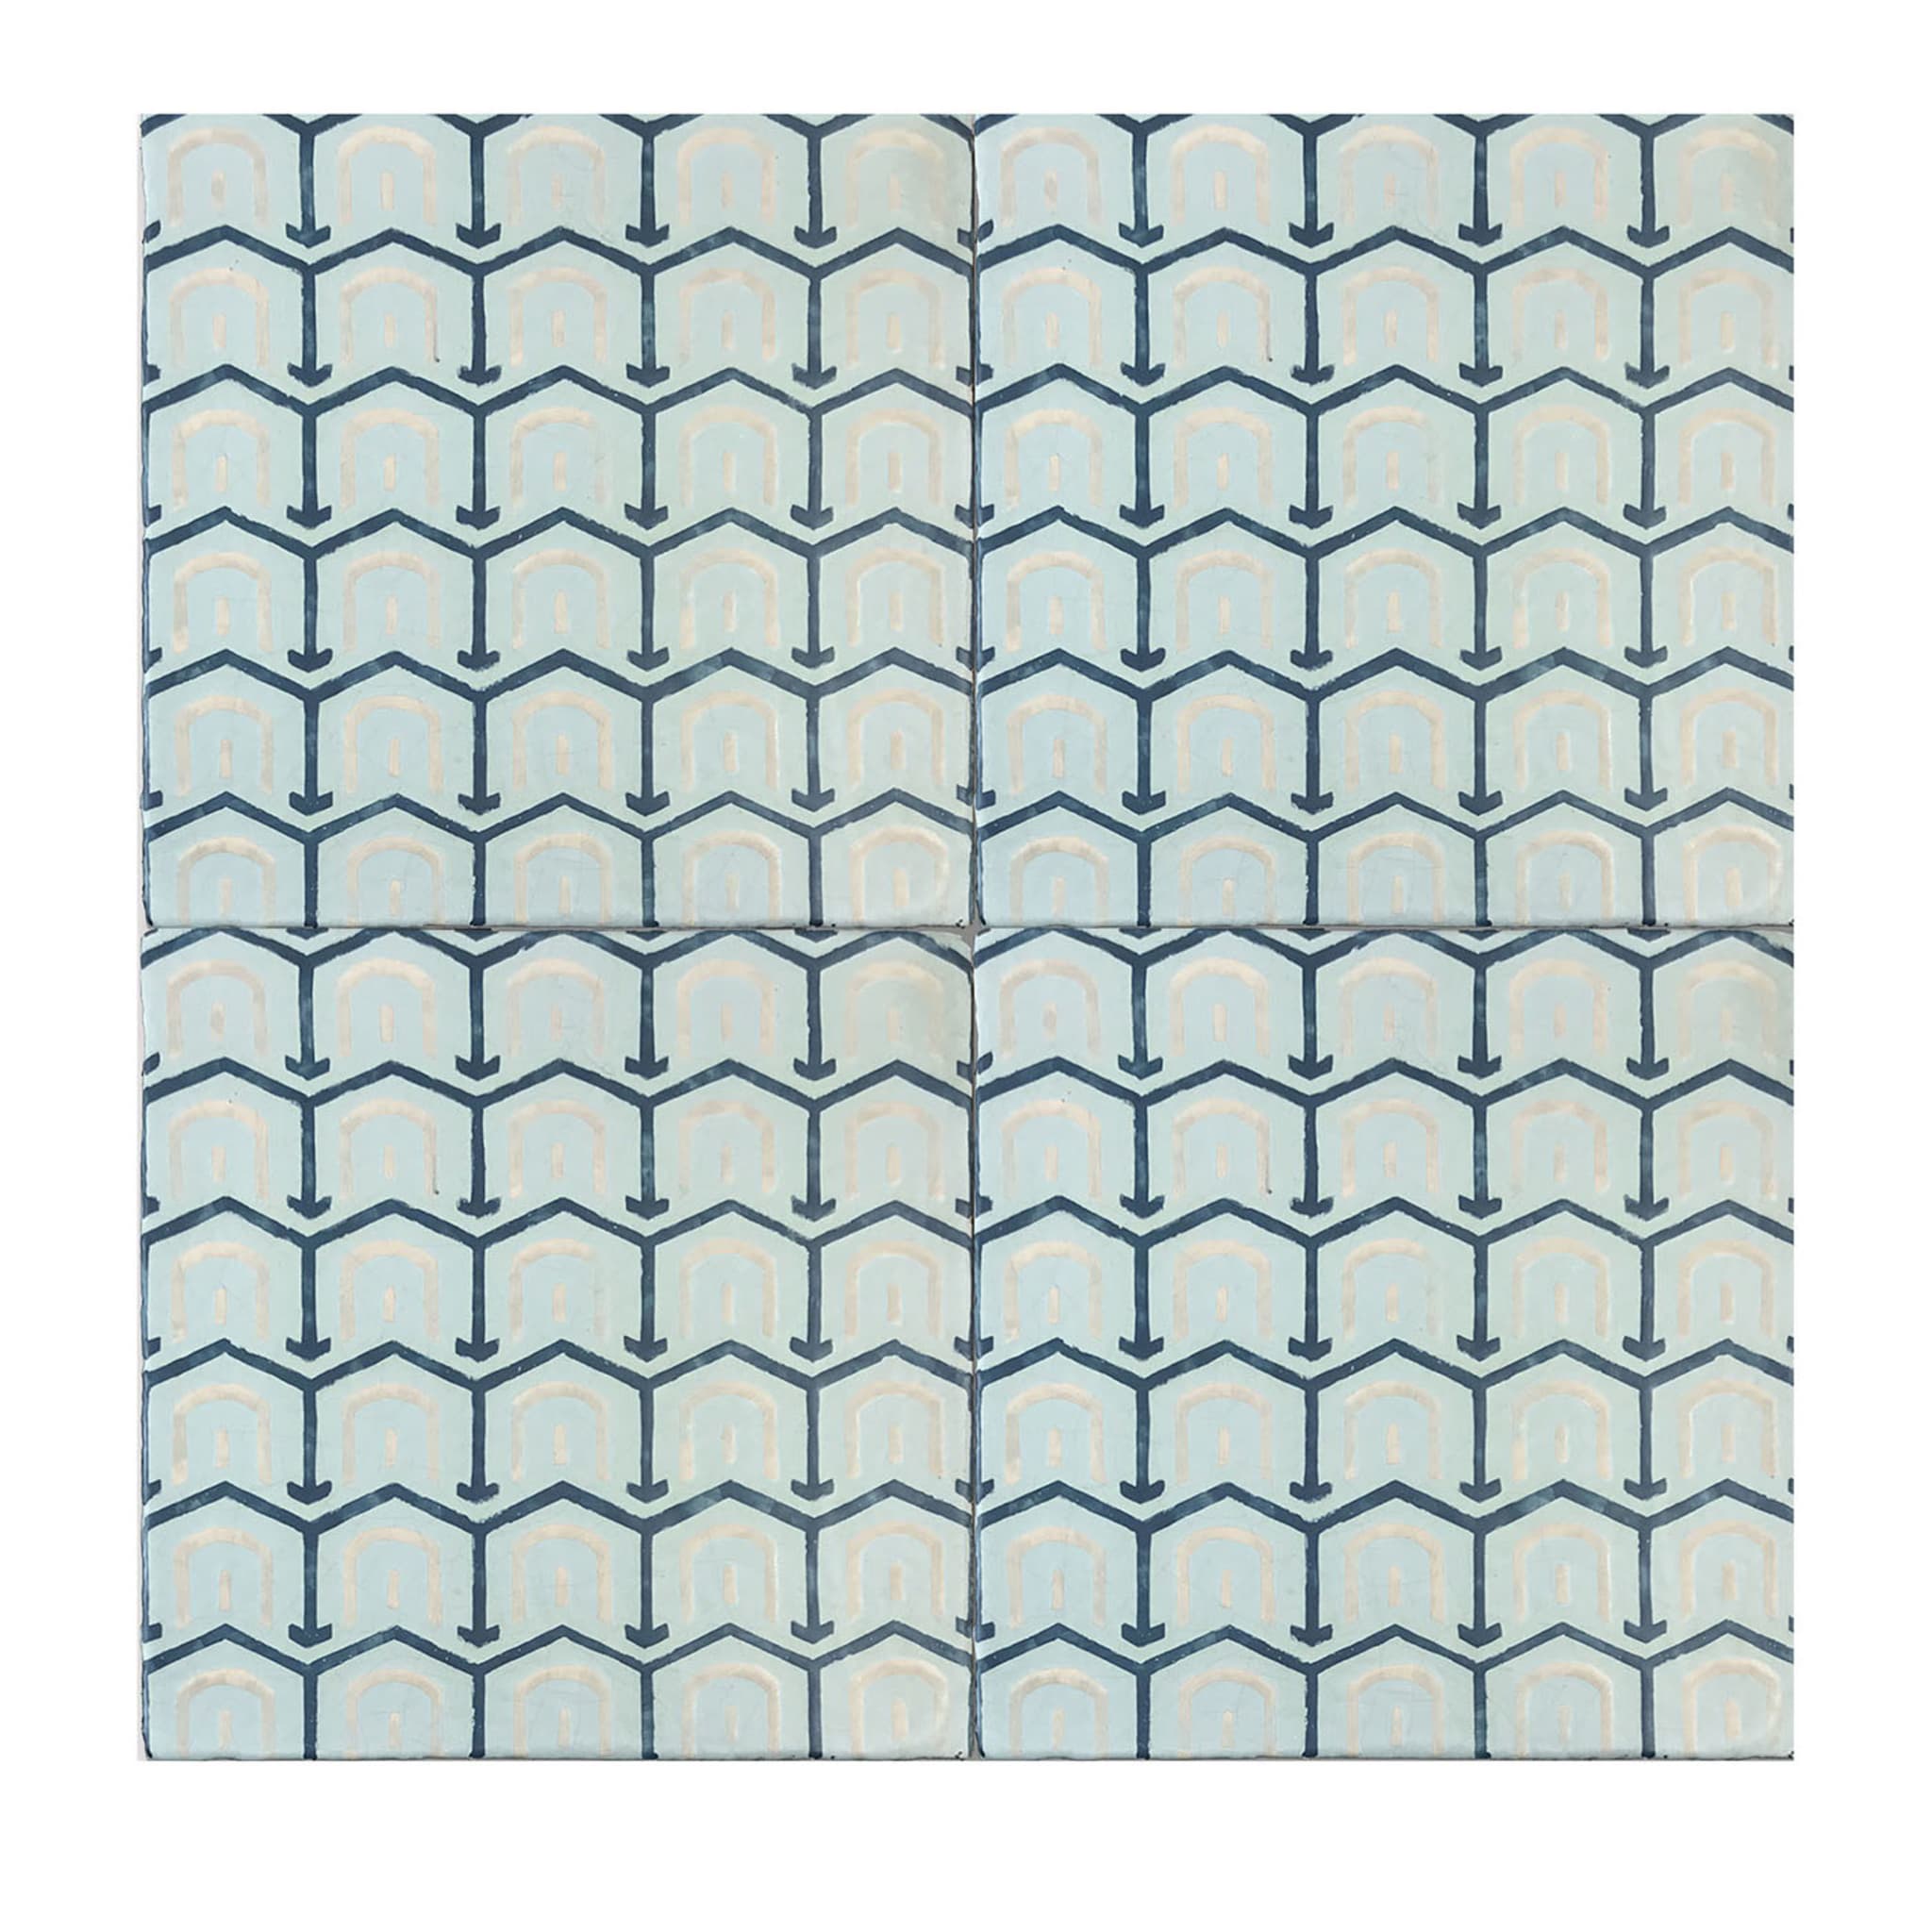 Daamè Set of 25 Square Light-Blue Tiles #2 - Main view